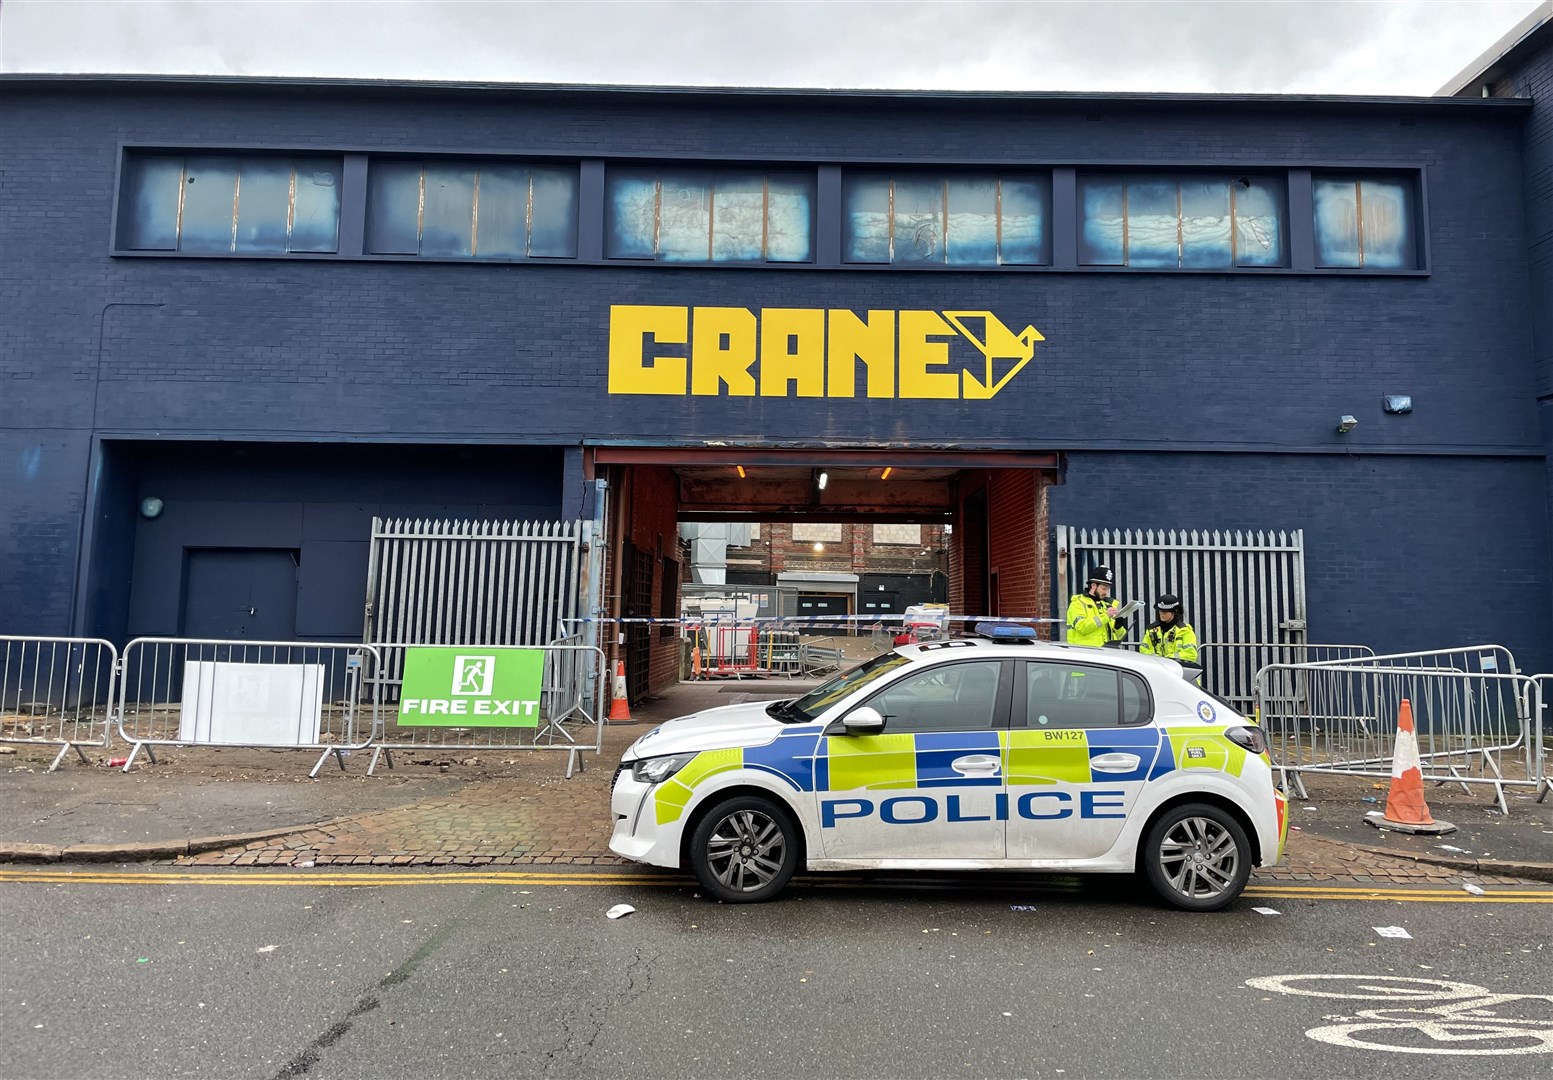 Police outside the Crane nightclub in Digbeth, Birmingham. (Phil Barnett/PA)